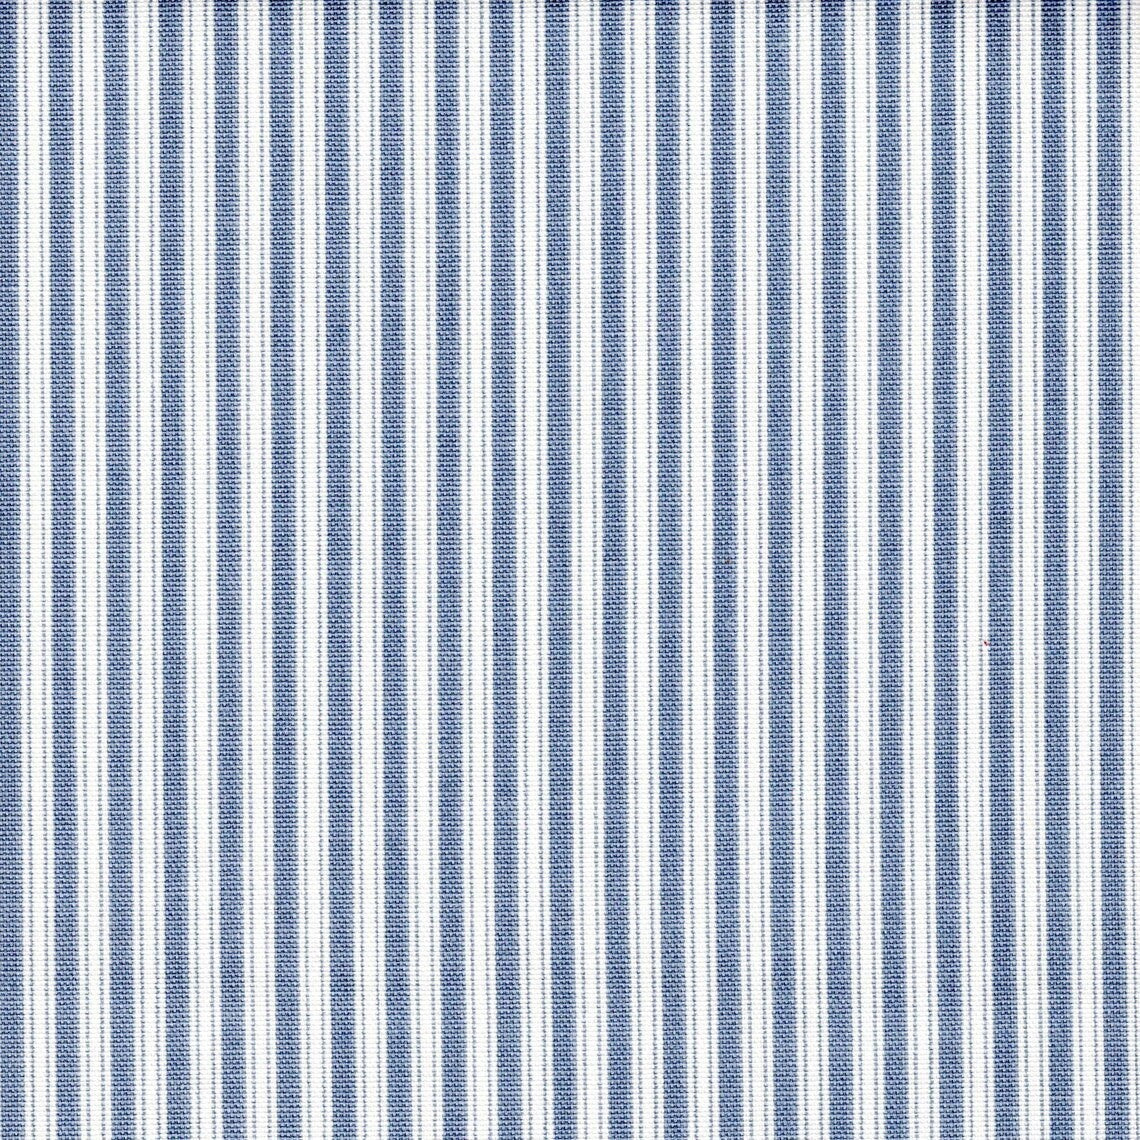 Polo Stripe Fabric